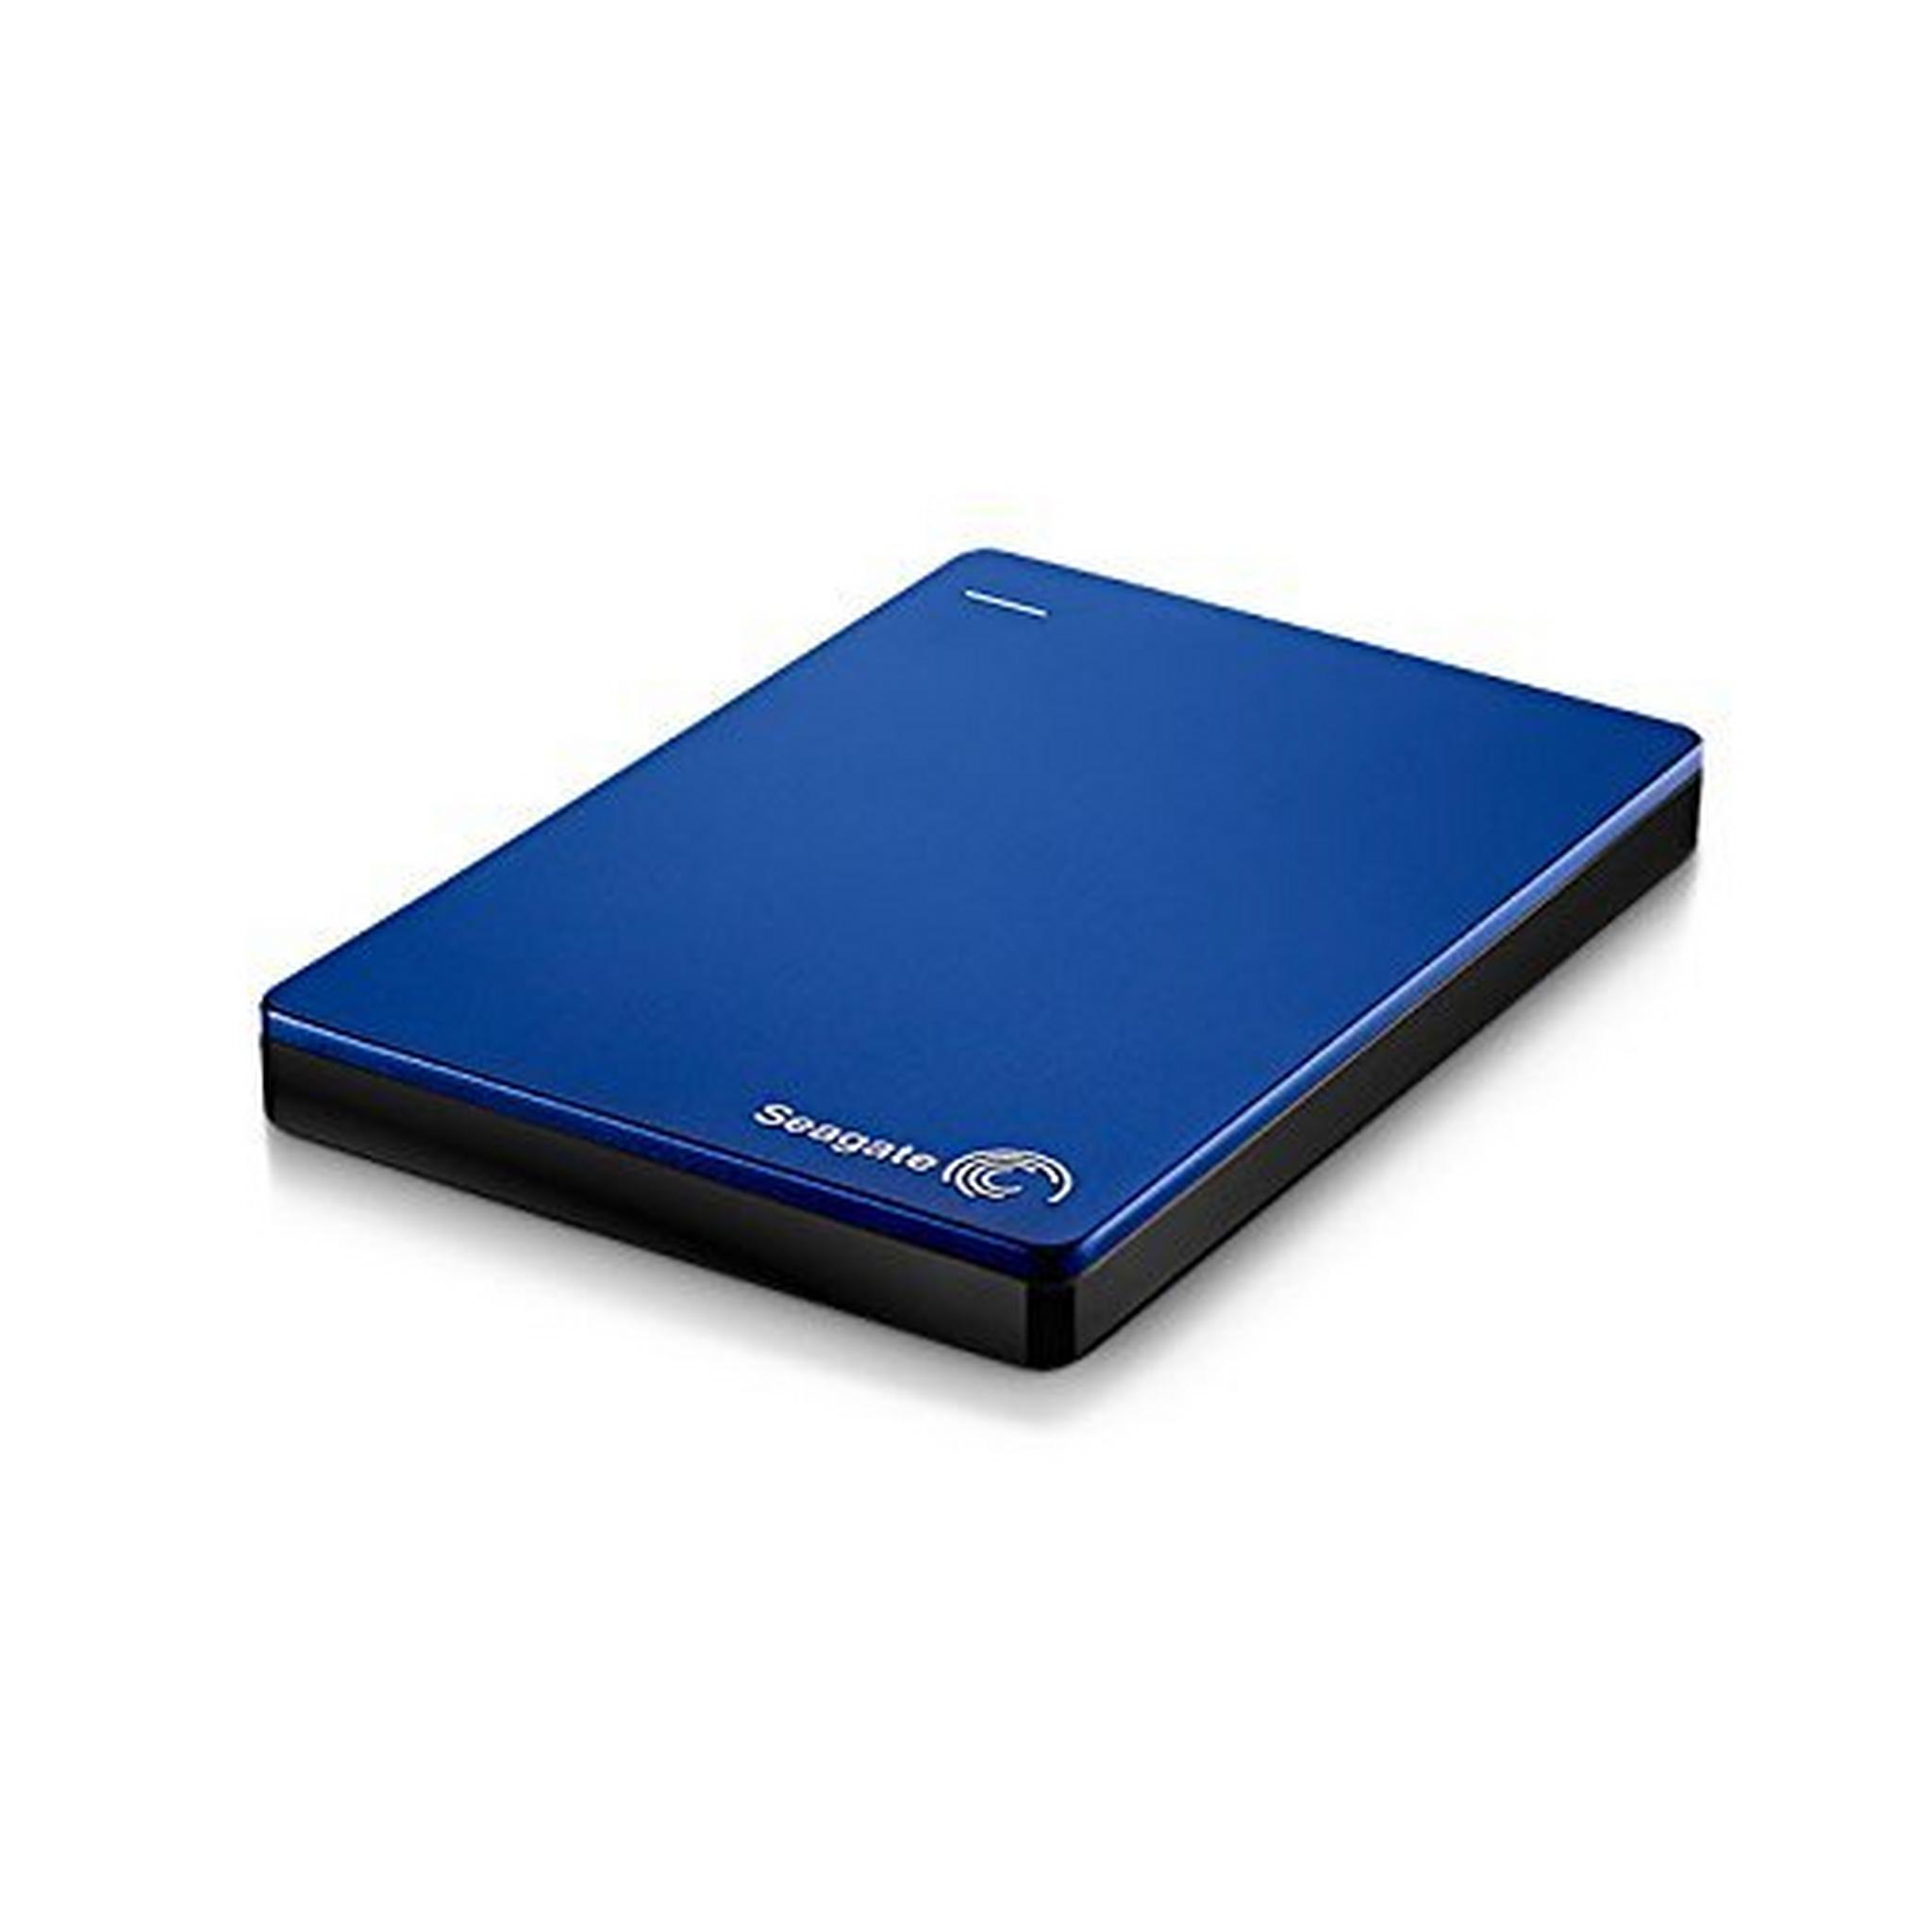 Seagate Back Up Plus 1TB Portable Hard Drive (STDR1000202) - Blue